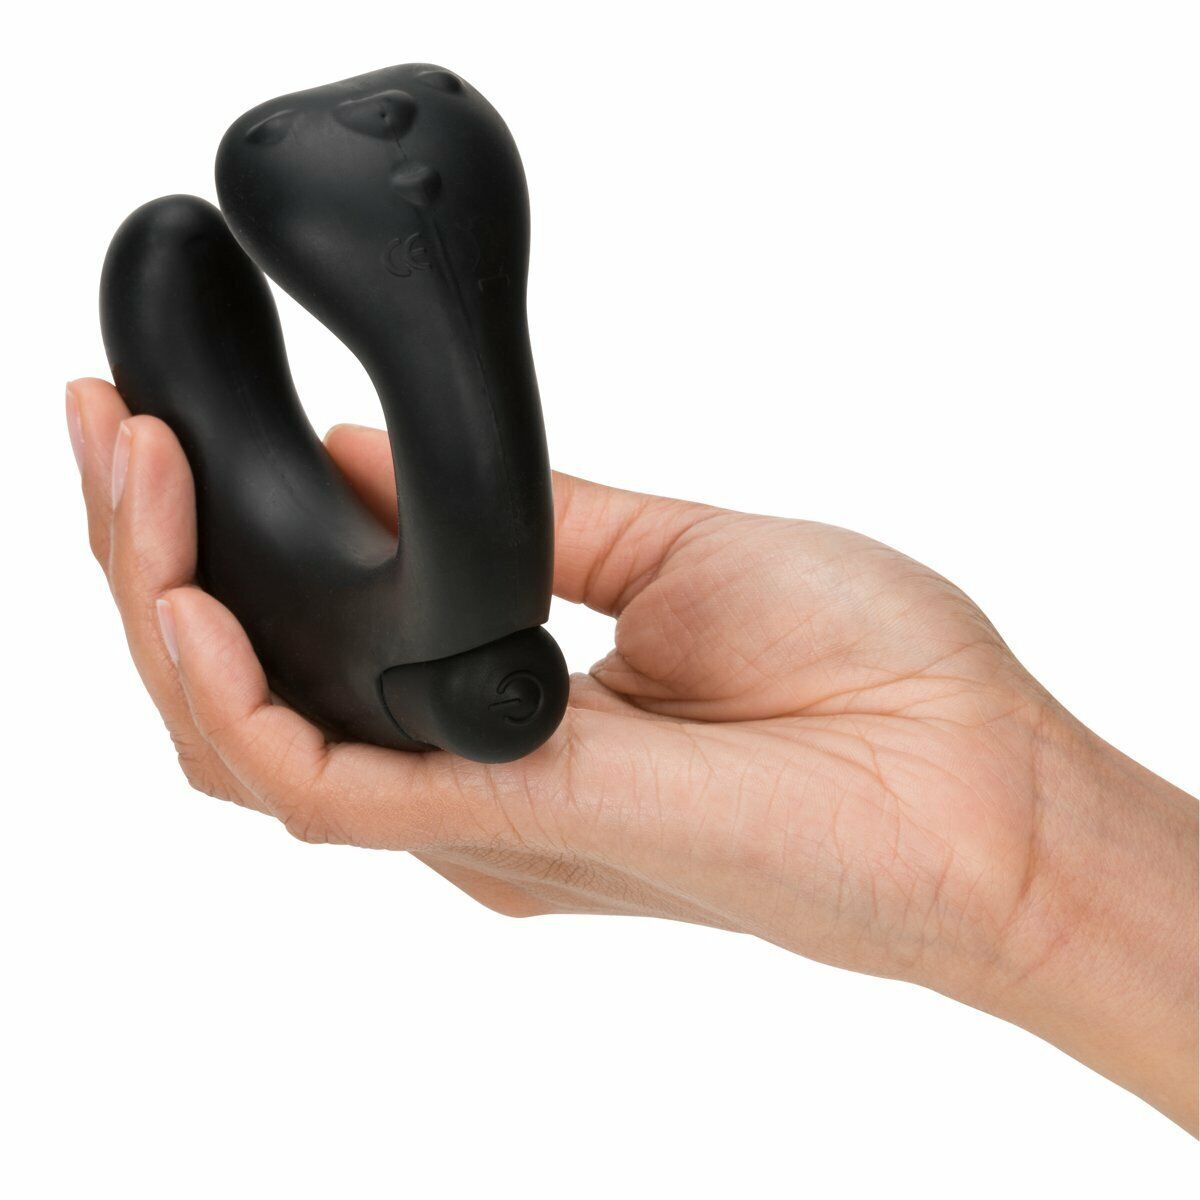 Silicone P-Rock Male Men P-spot Prostate Massager Anal Vibrator Vibe Butt Plug